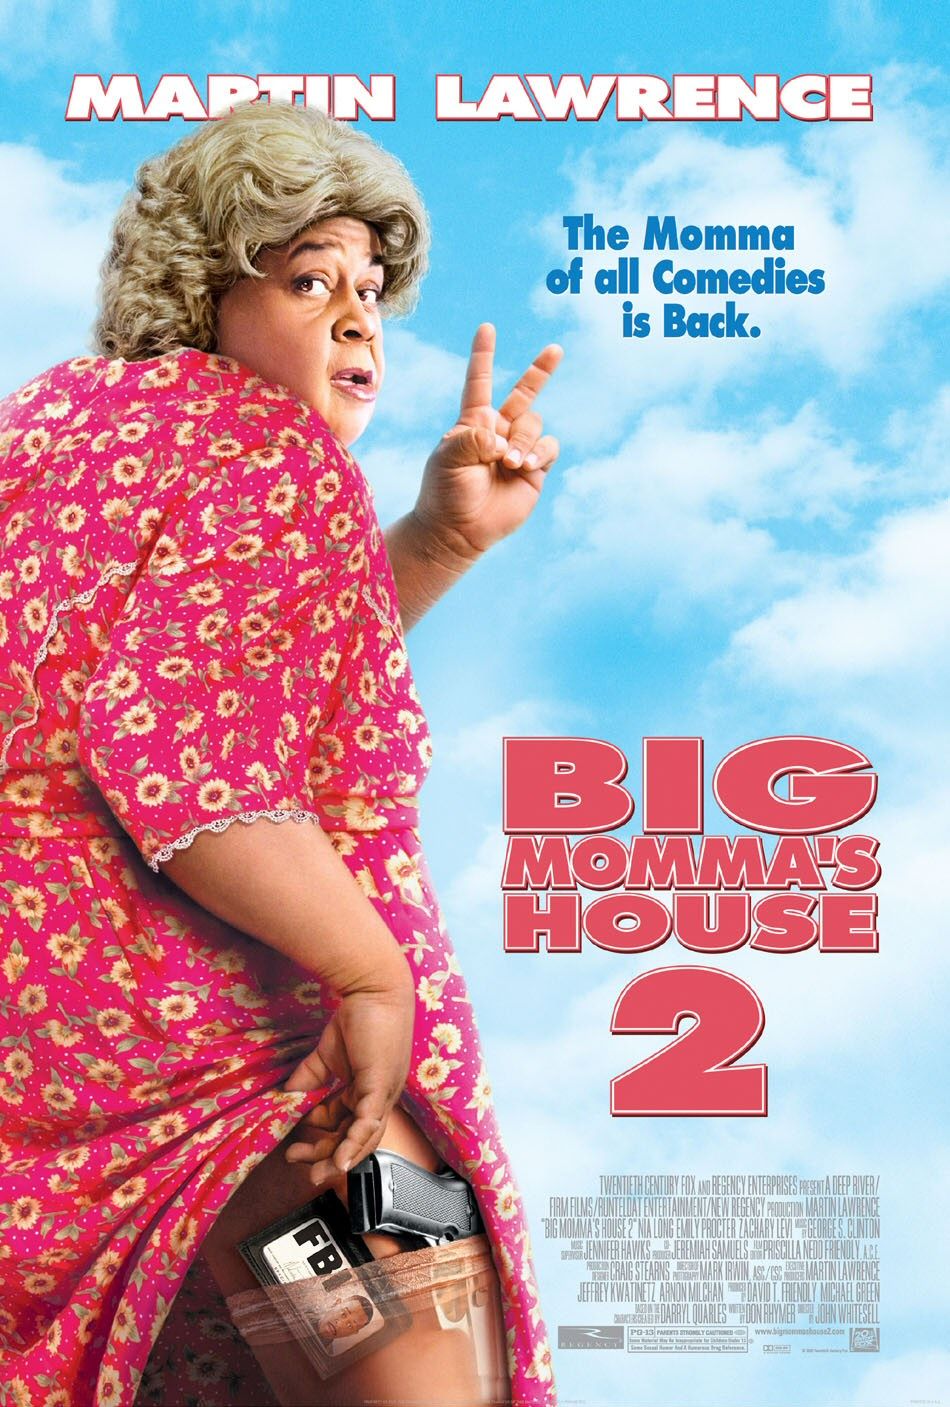 FULL MOVIE: Big Momma’s House 2 (2006)